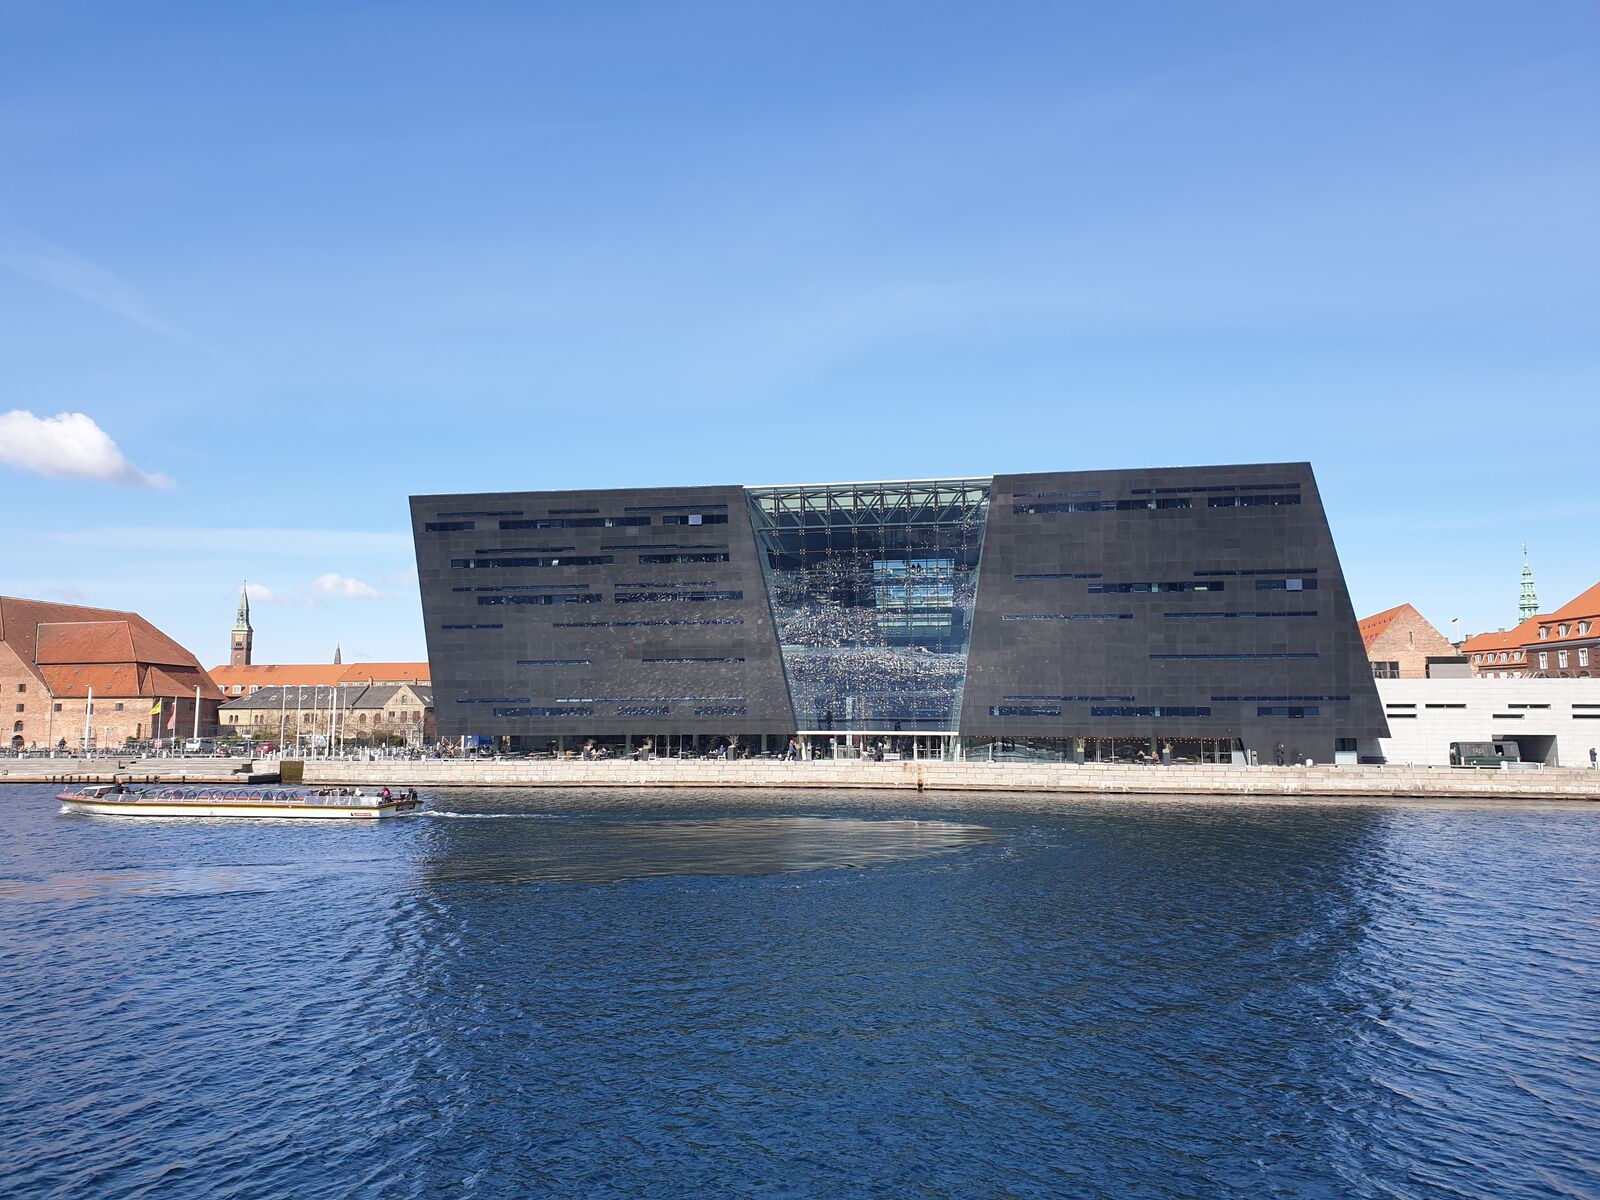 UFO #1: The Royal Danish Library